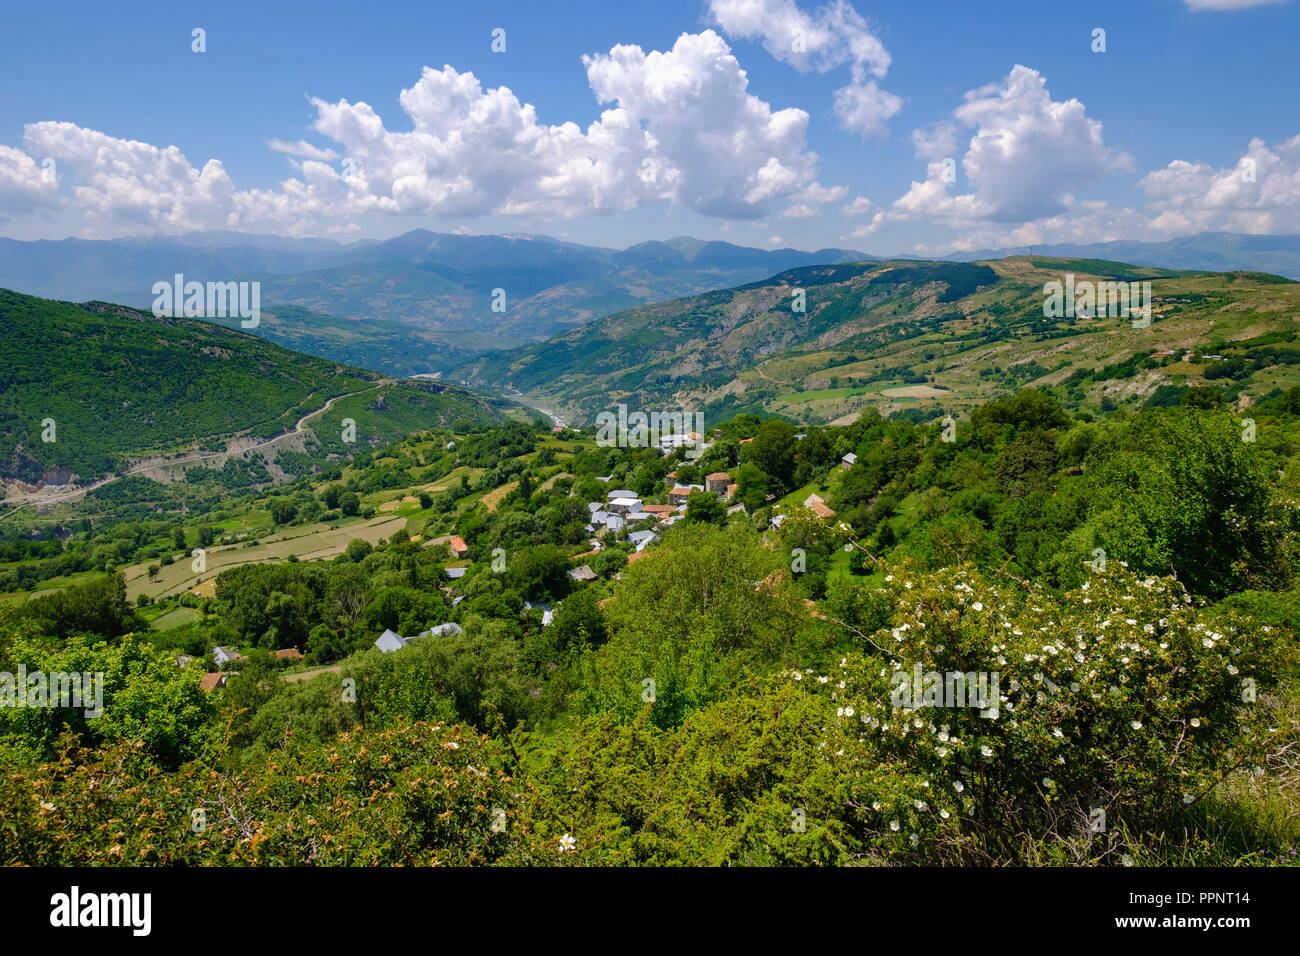 Villaggio Ceren, Korab-Koritnik natura park Park, Nord di Peshkopia, Qark Dibra, Albania Foto Stock